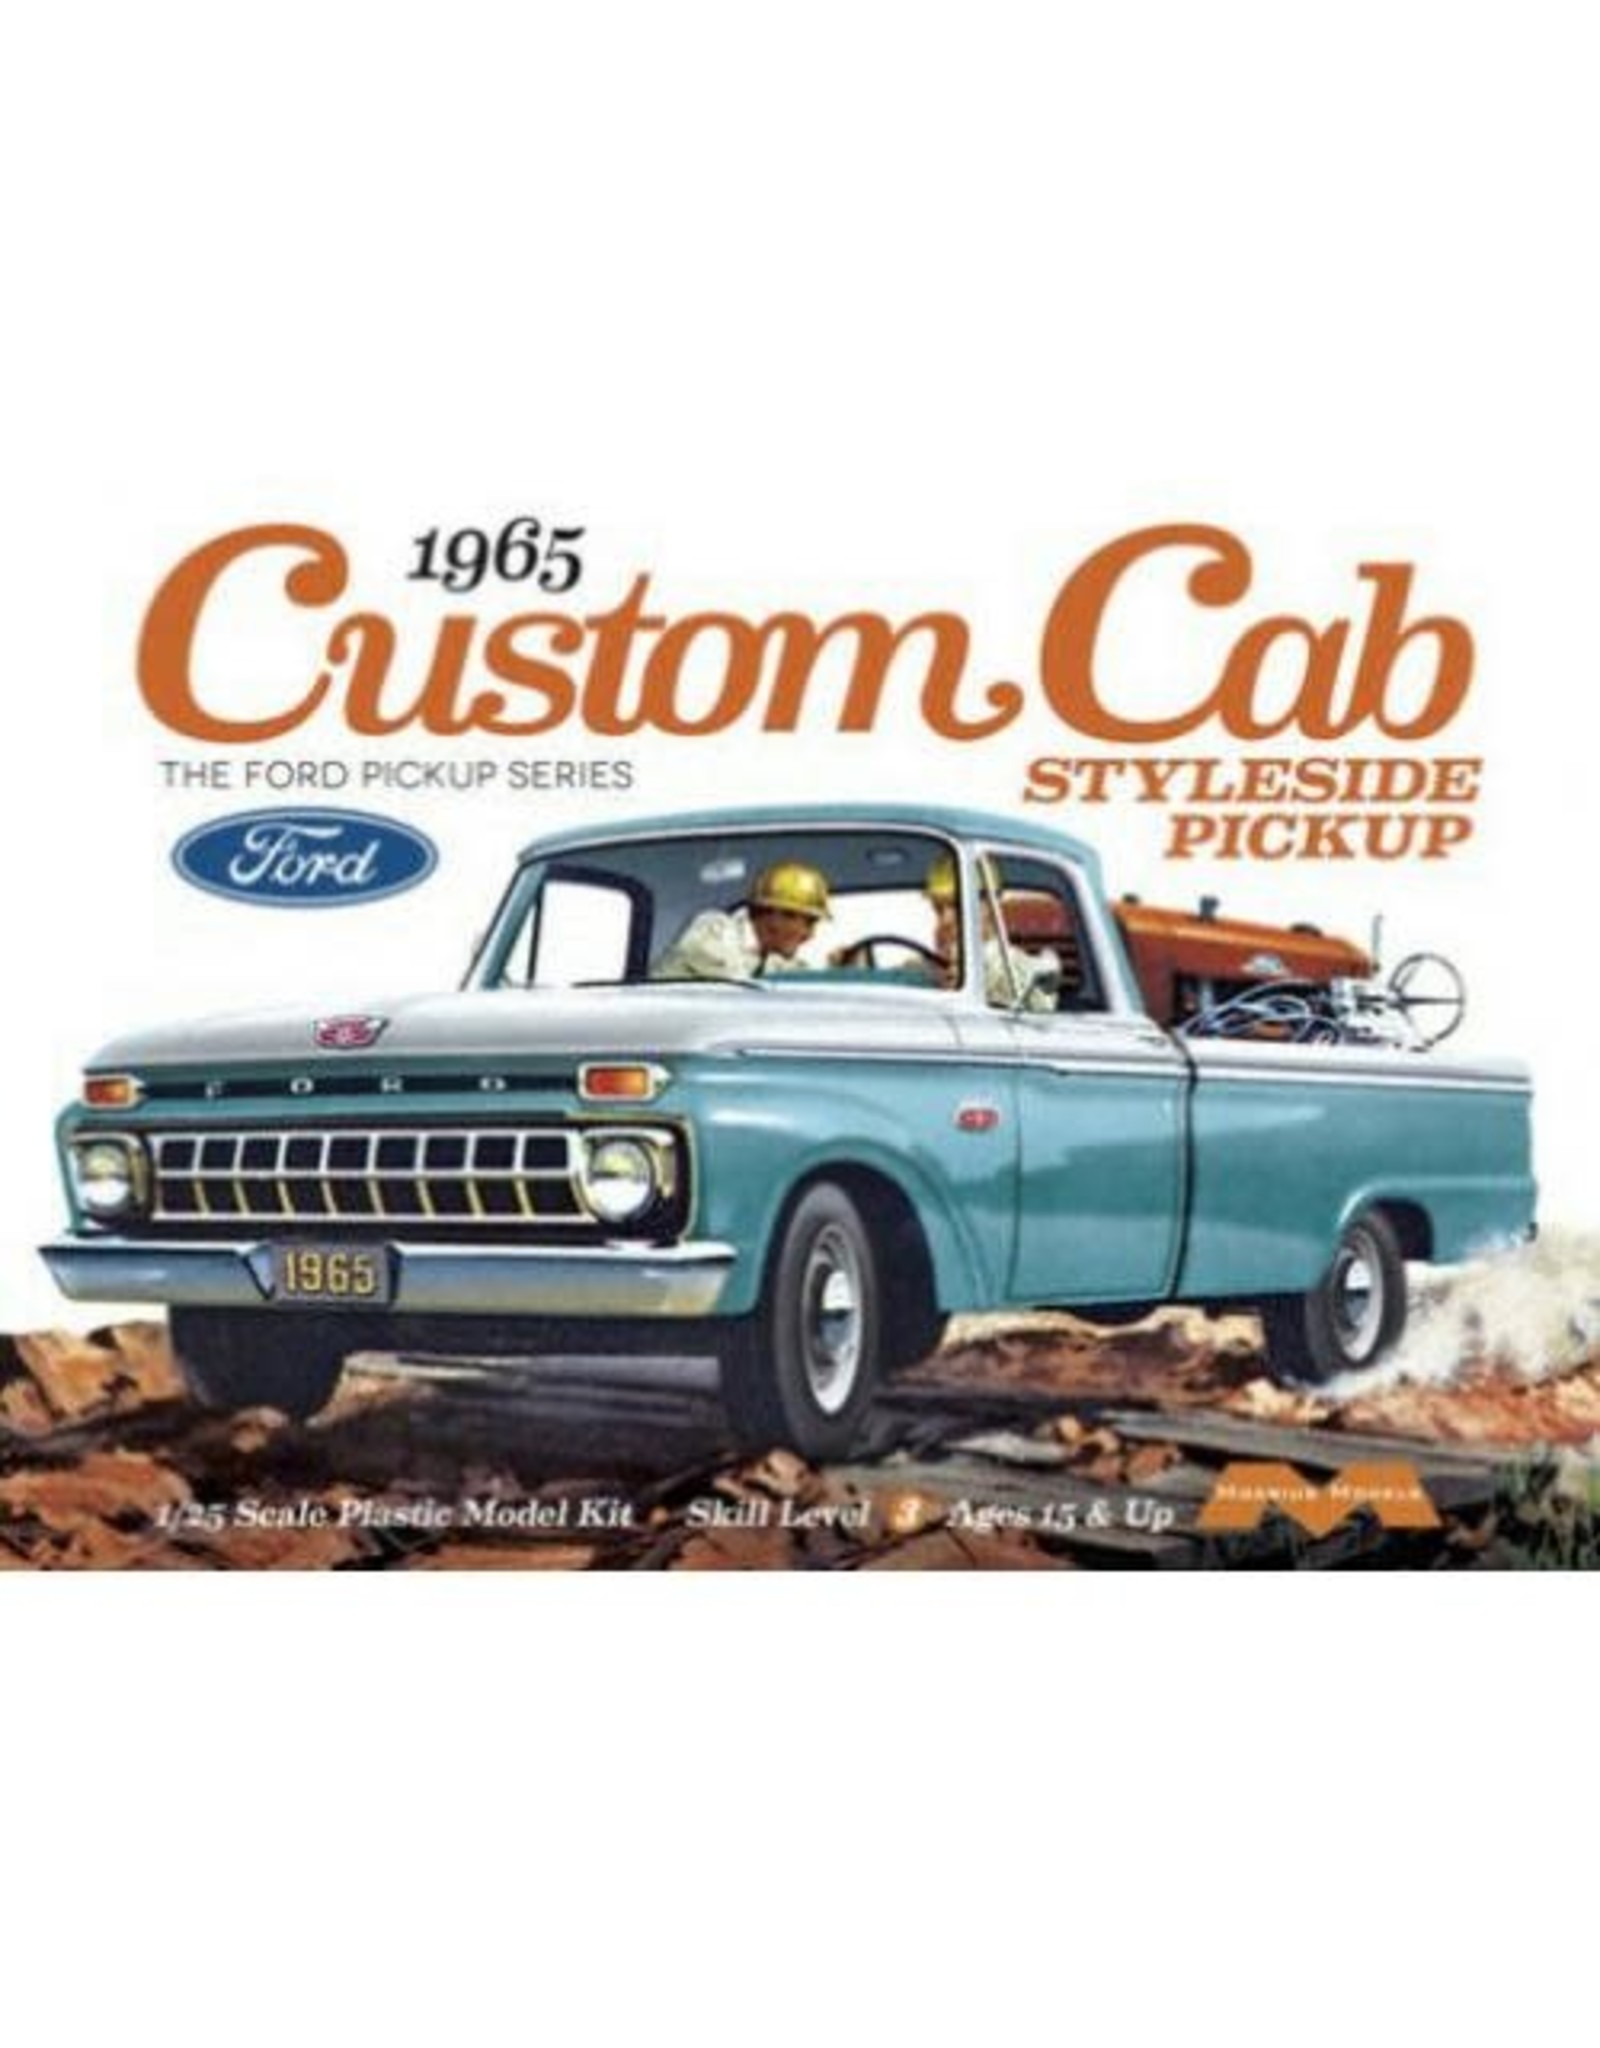 Moebius 1965 Custom cab - The Ford pickup series (1:25)